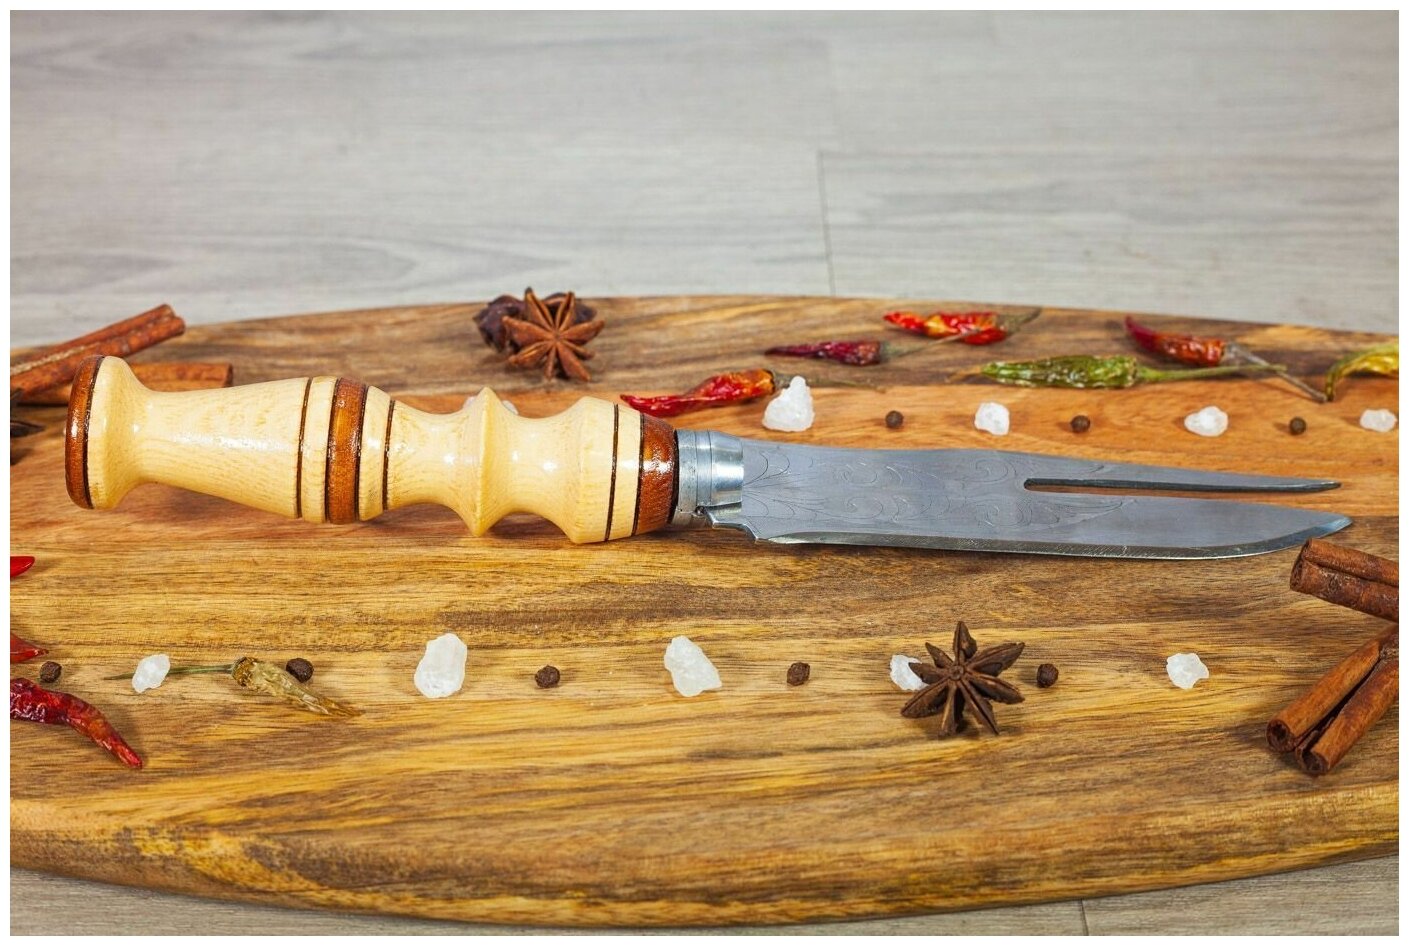 Вилка - нож для снятия мяса с резной рукоятью и гравировкой на лезвии №2 - фотография № 2